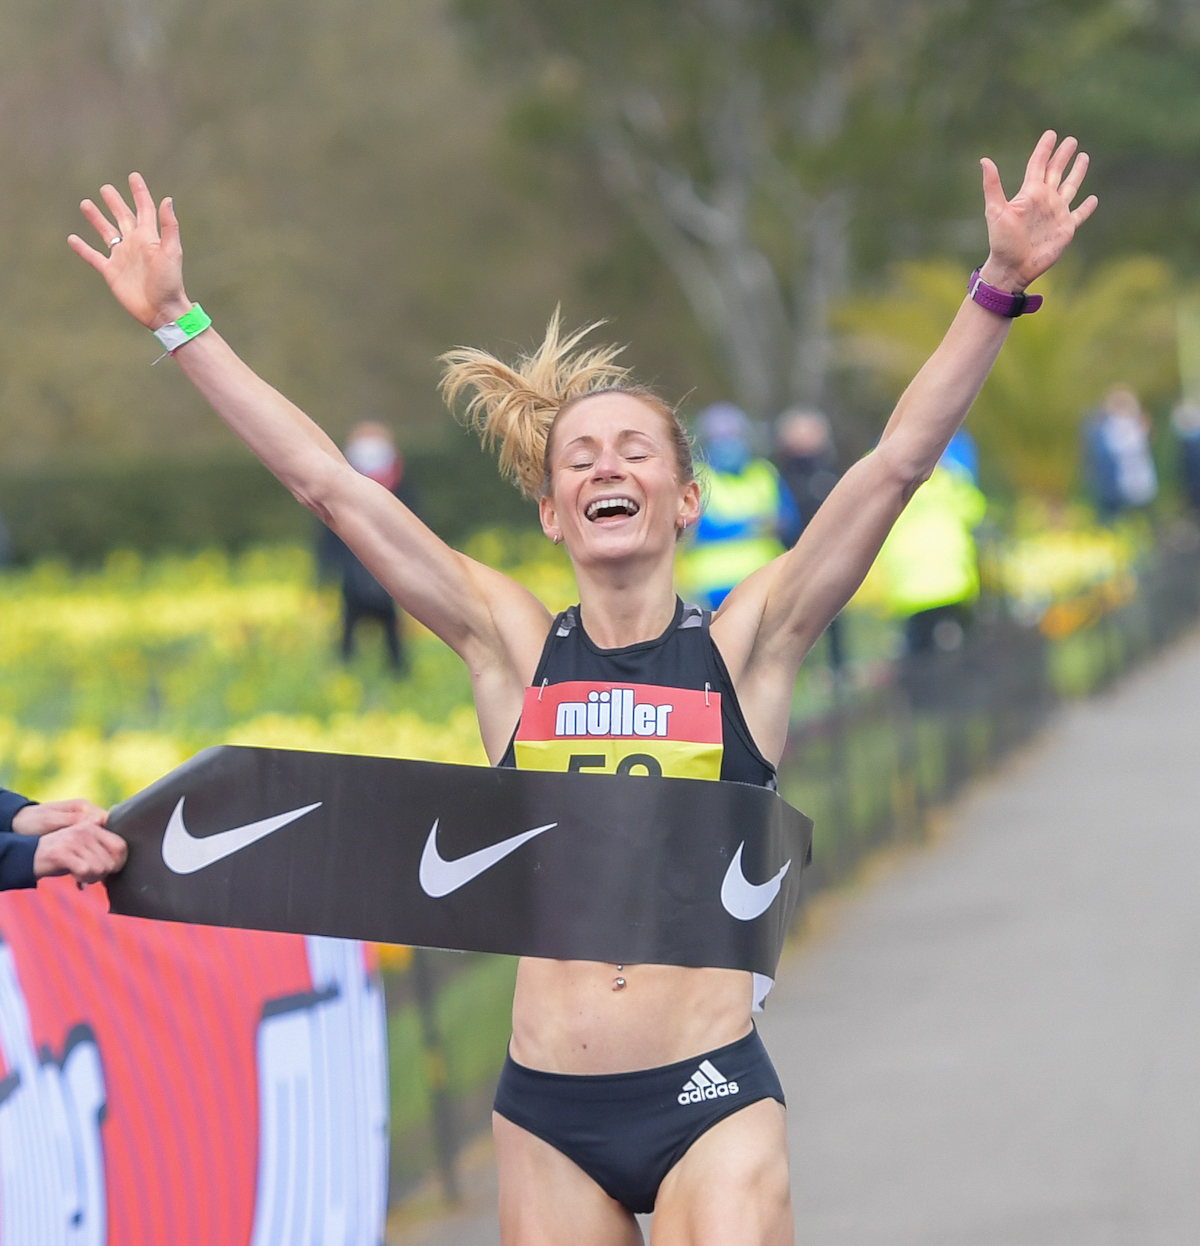 Muller British Athletics Marathon and 20km Walk Trials, Kew, England